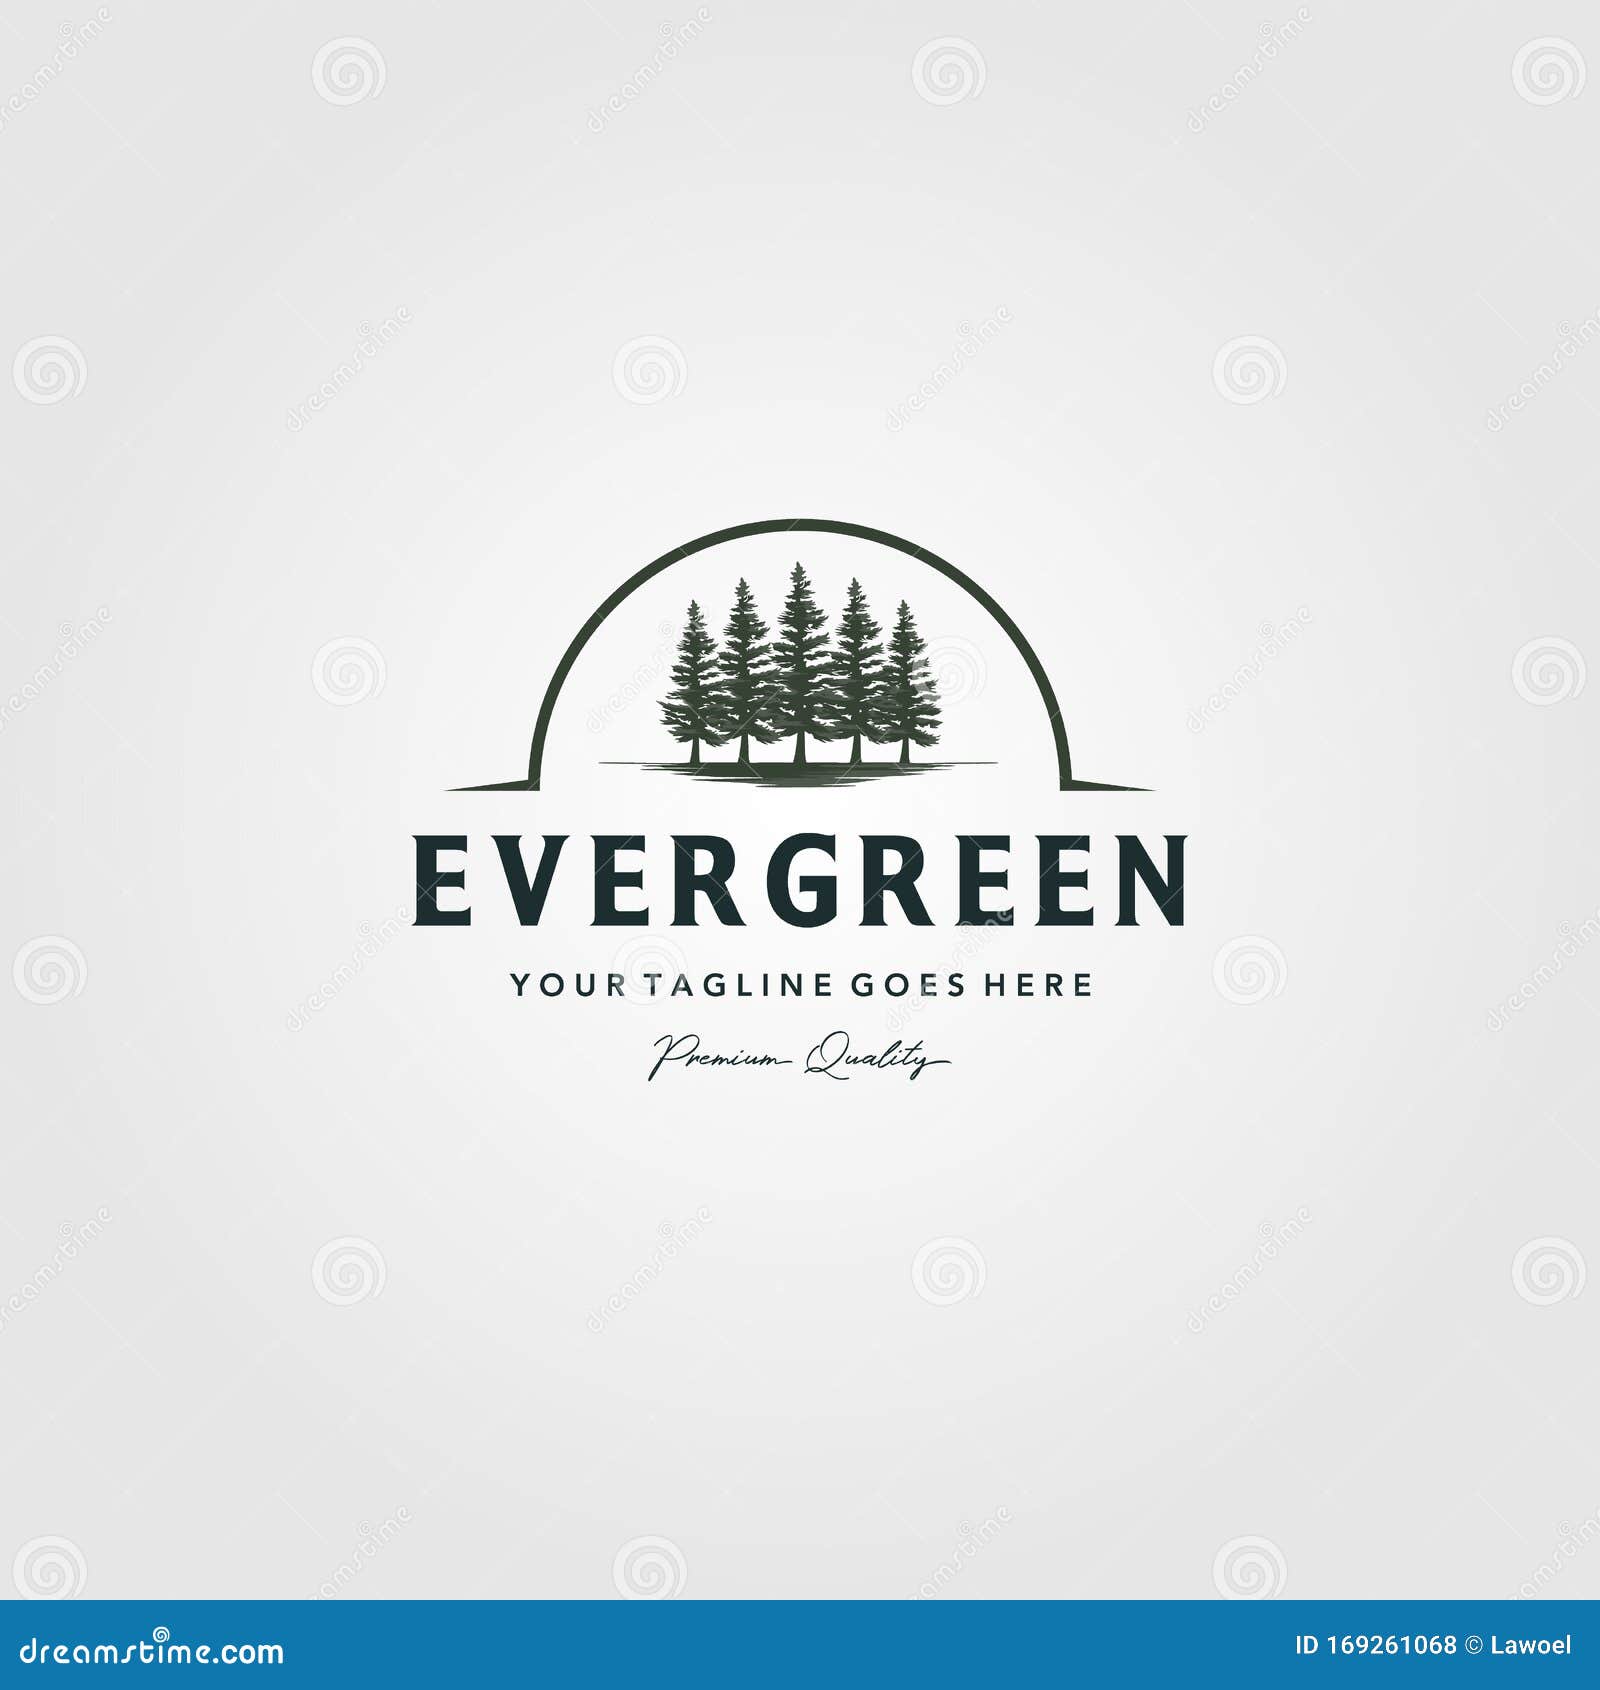 pine trees logo evergreen vintage spruce, cedar trees   